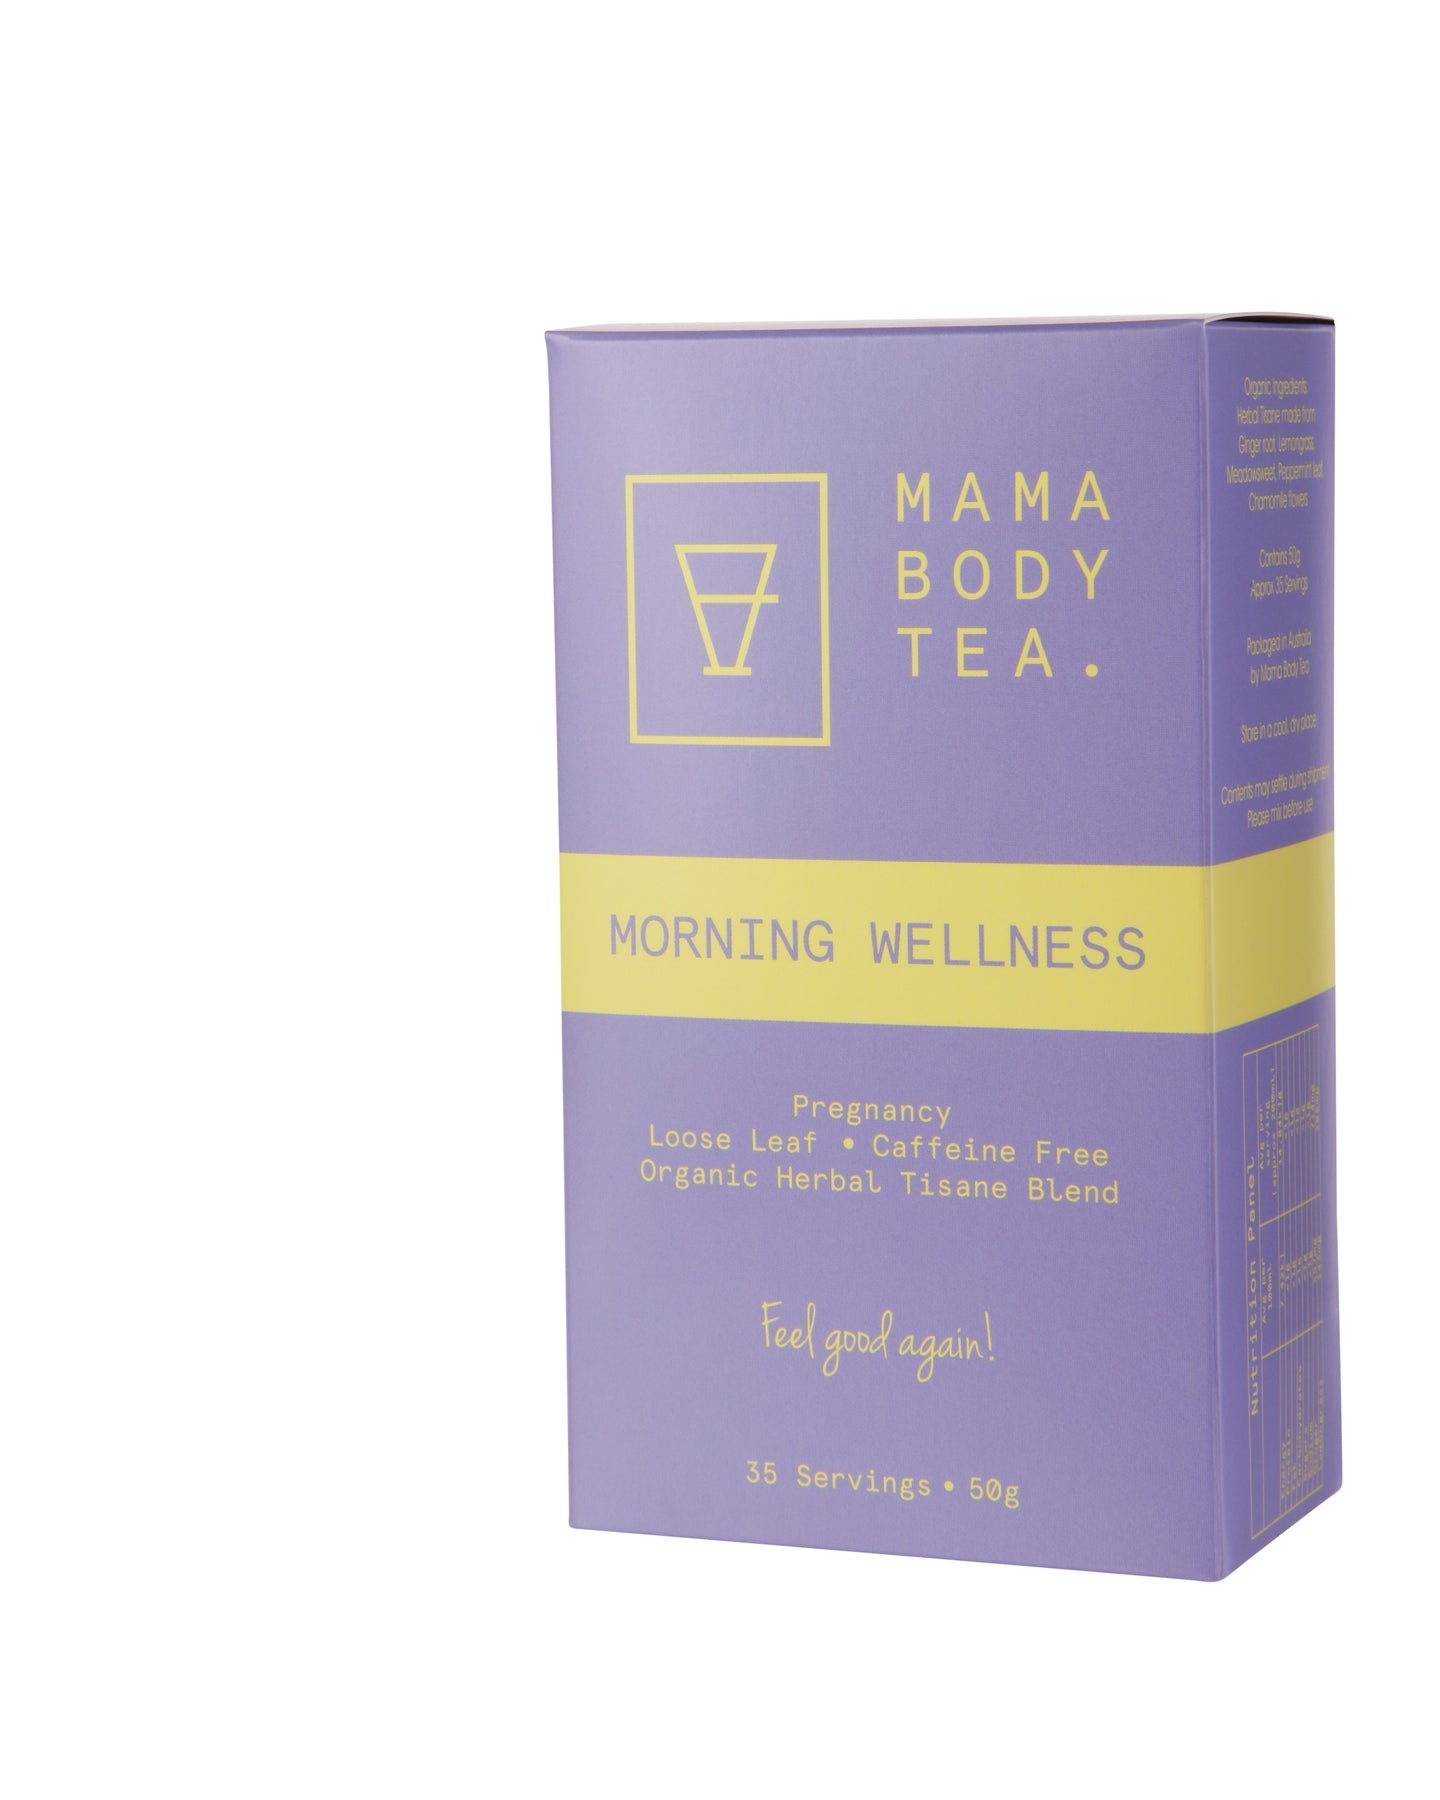 SALE - Morning Wellness Tea (end of June Best Before)